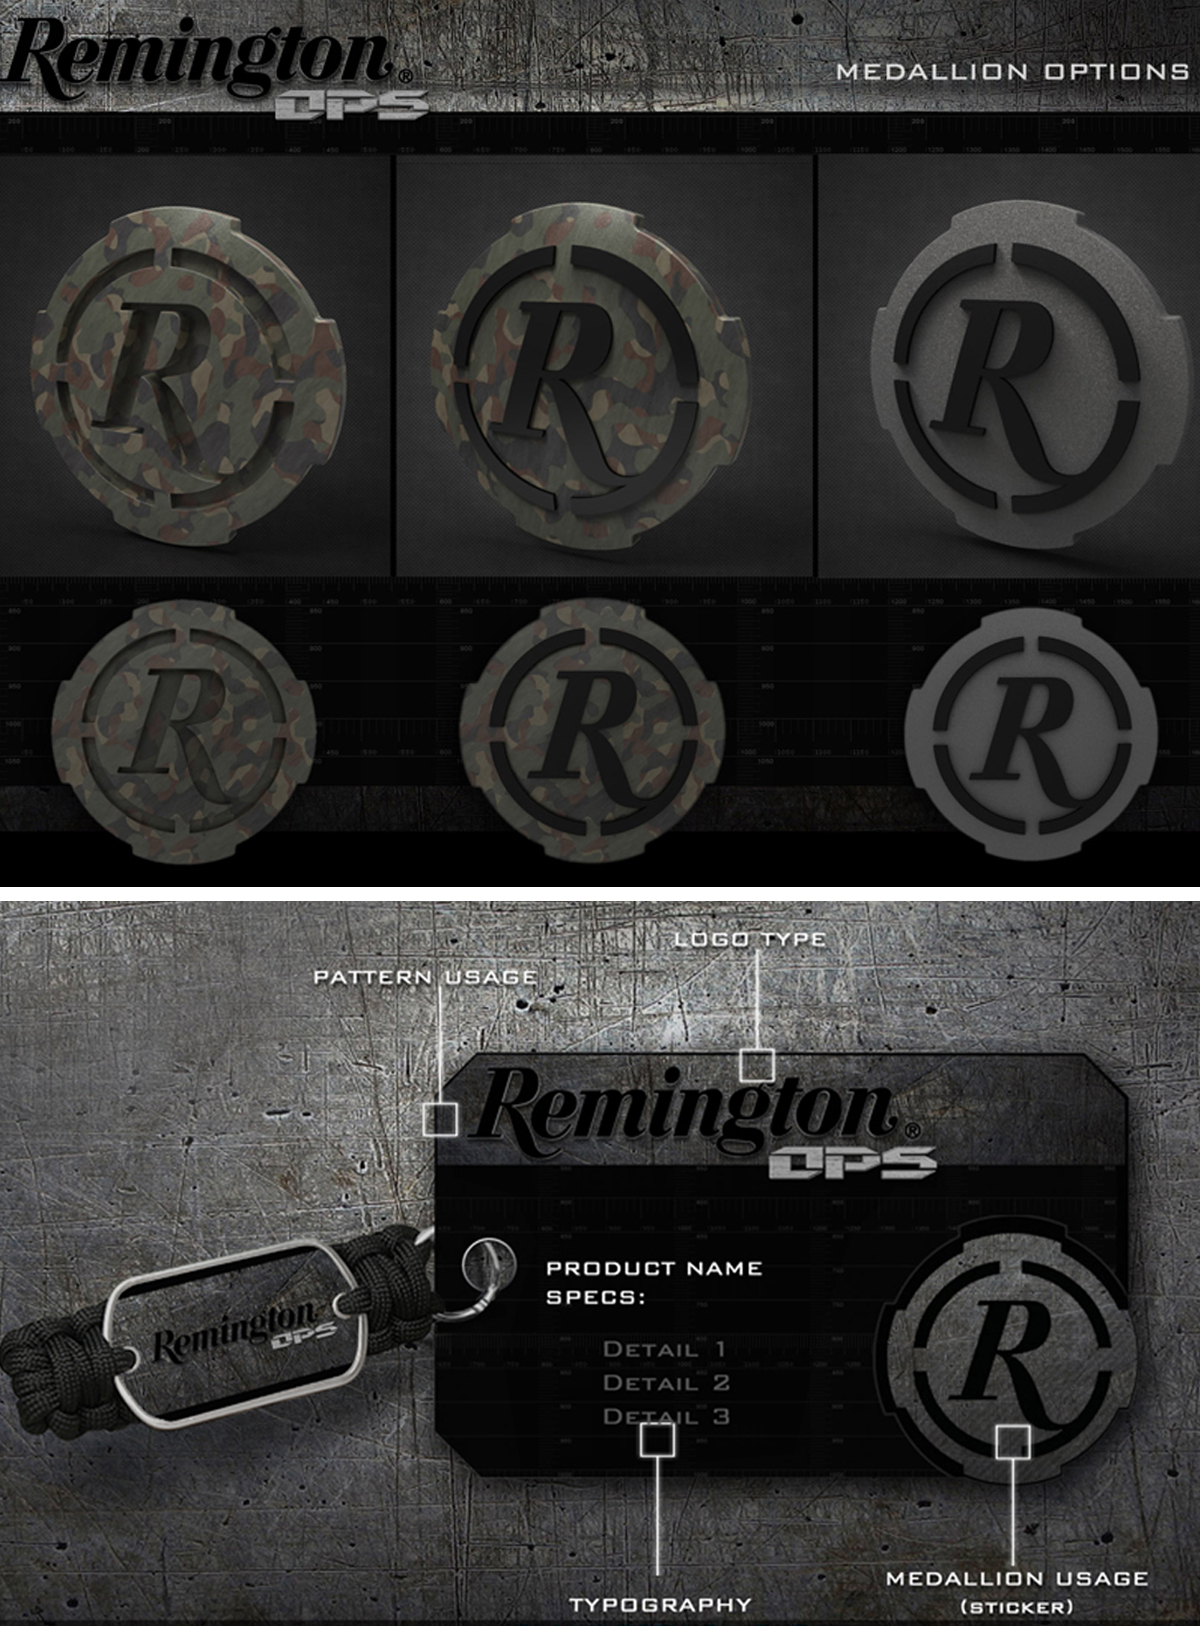 01 Remington Rusty Allen